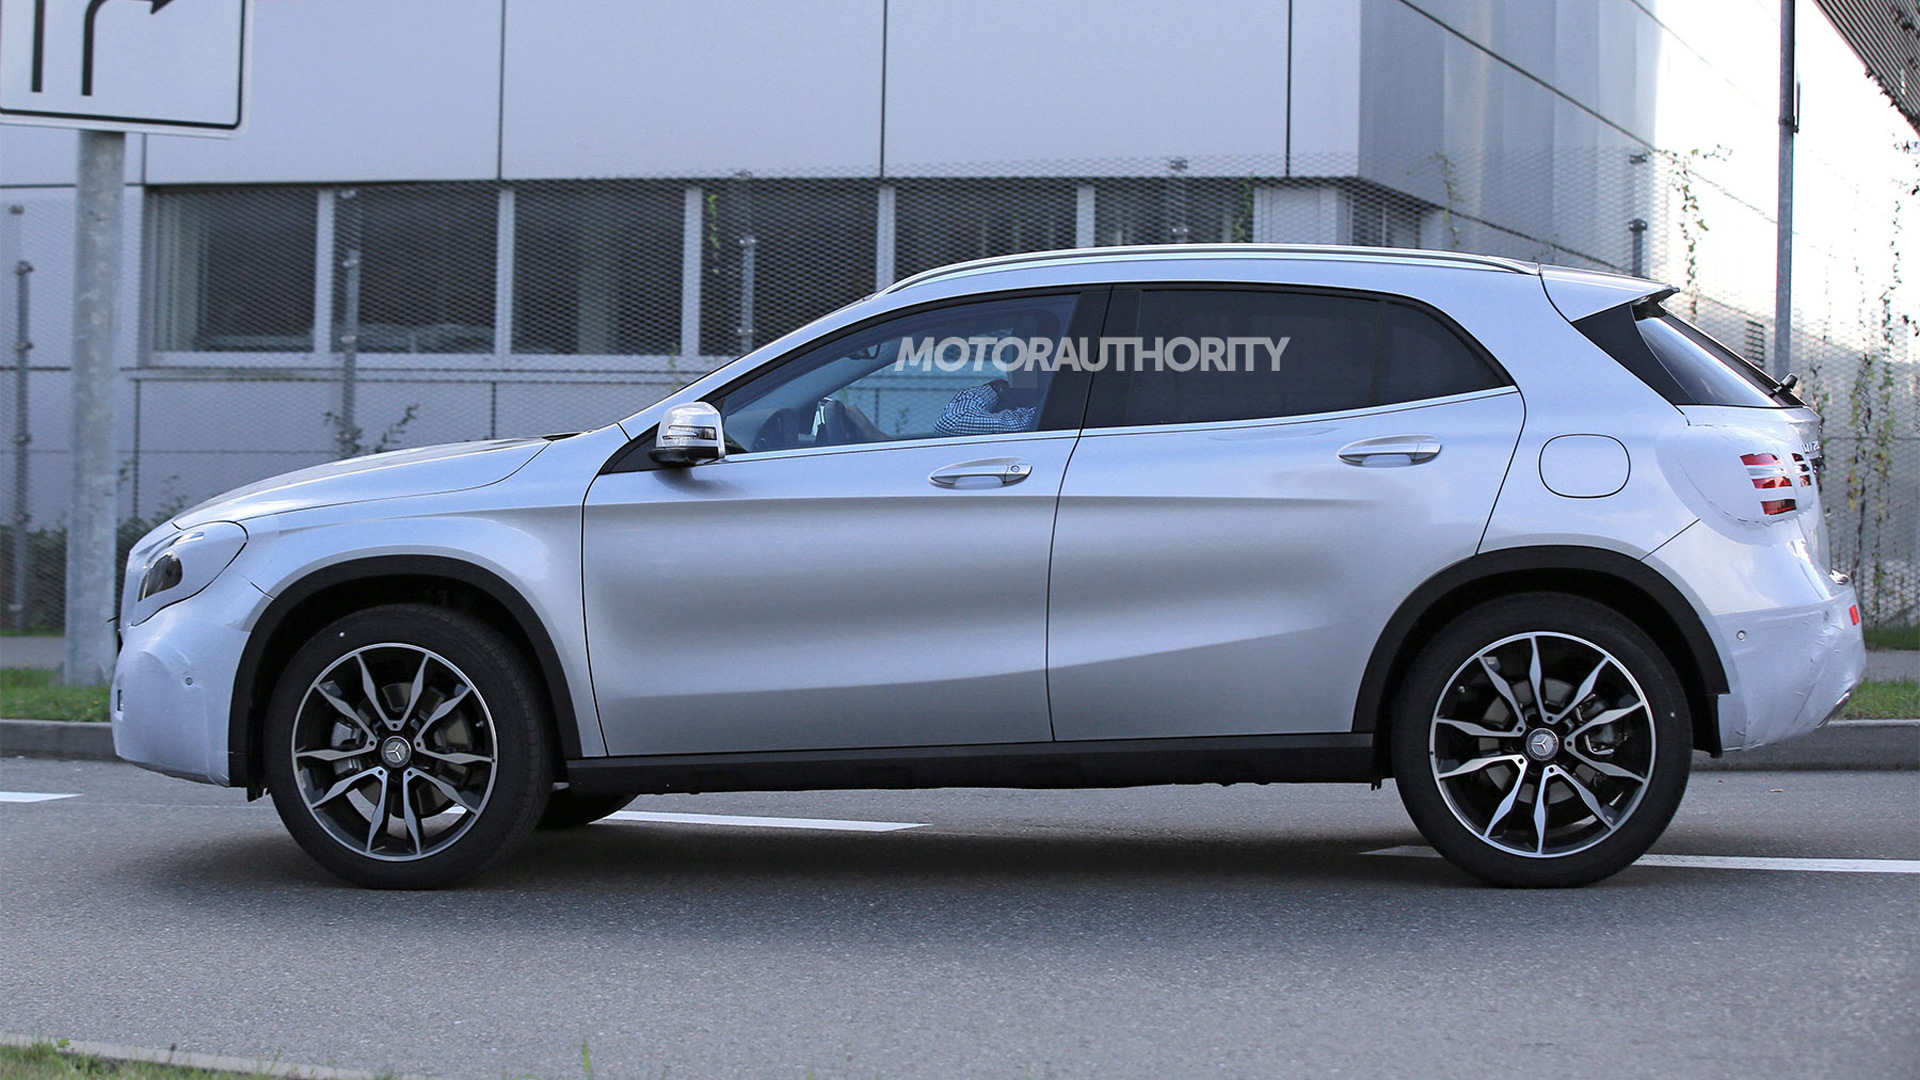 2018 Mercedes-Benz GLA facelift spy shots - Image via S. Baldauf/SB-Medien